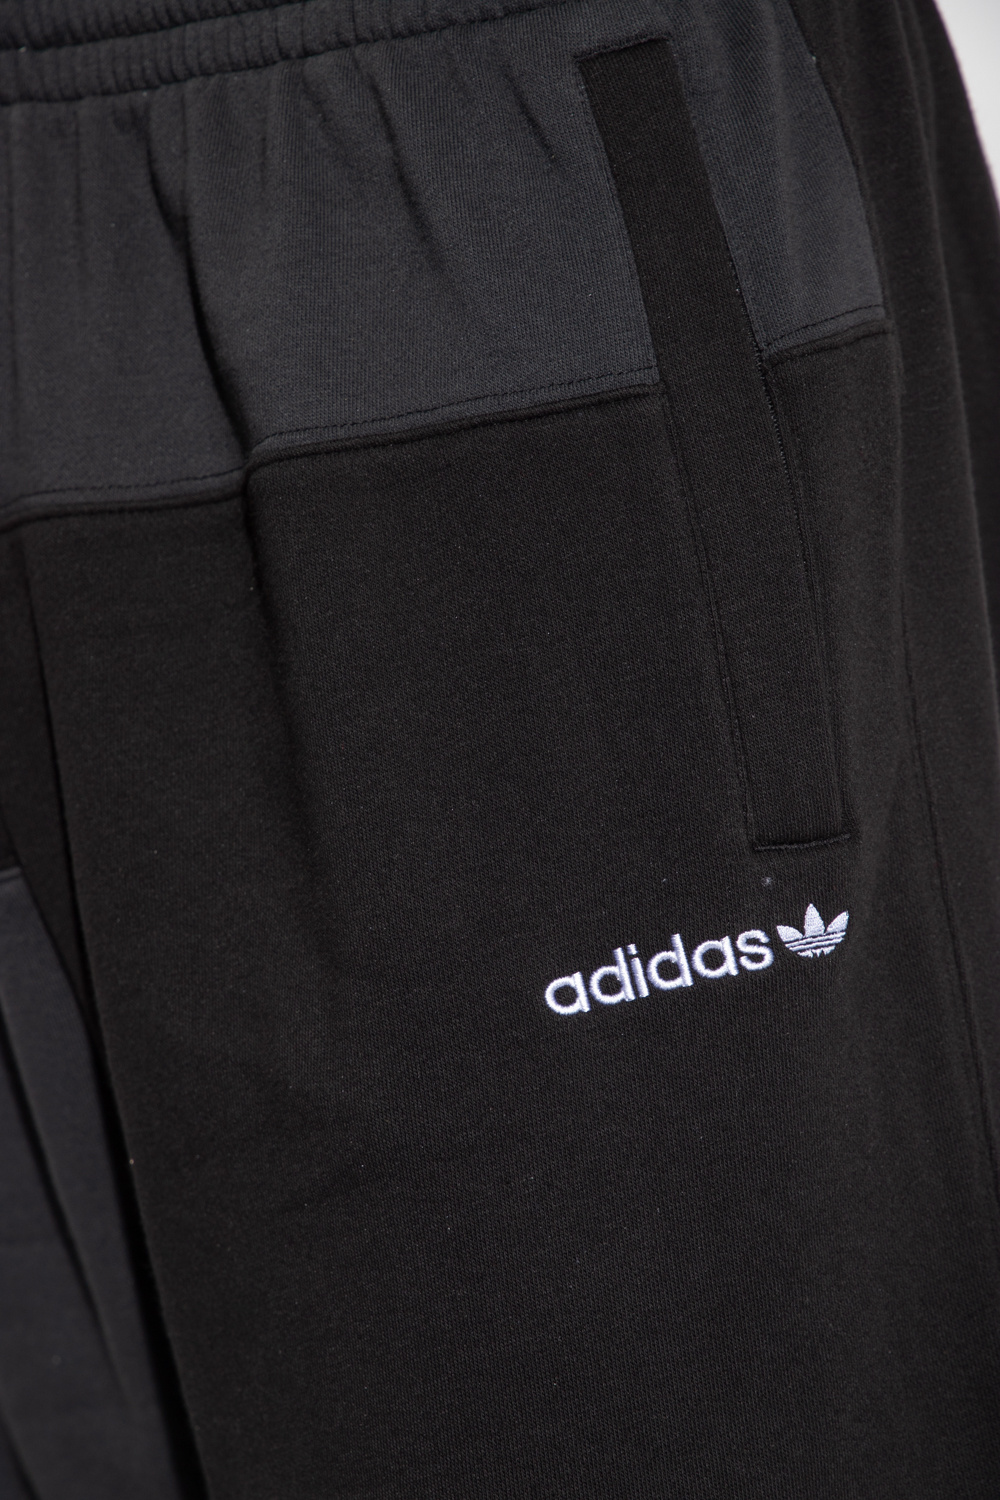 adidas lifters Originals Sweatpants with logo